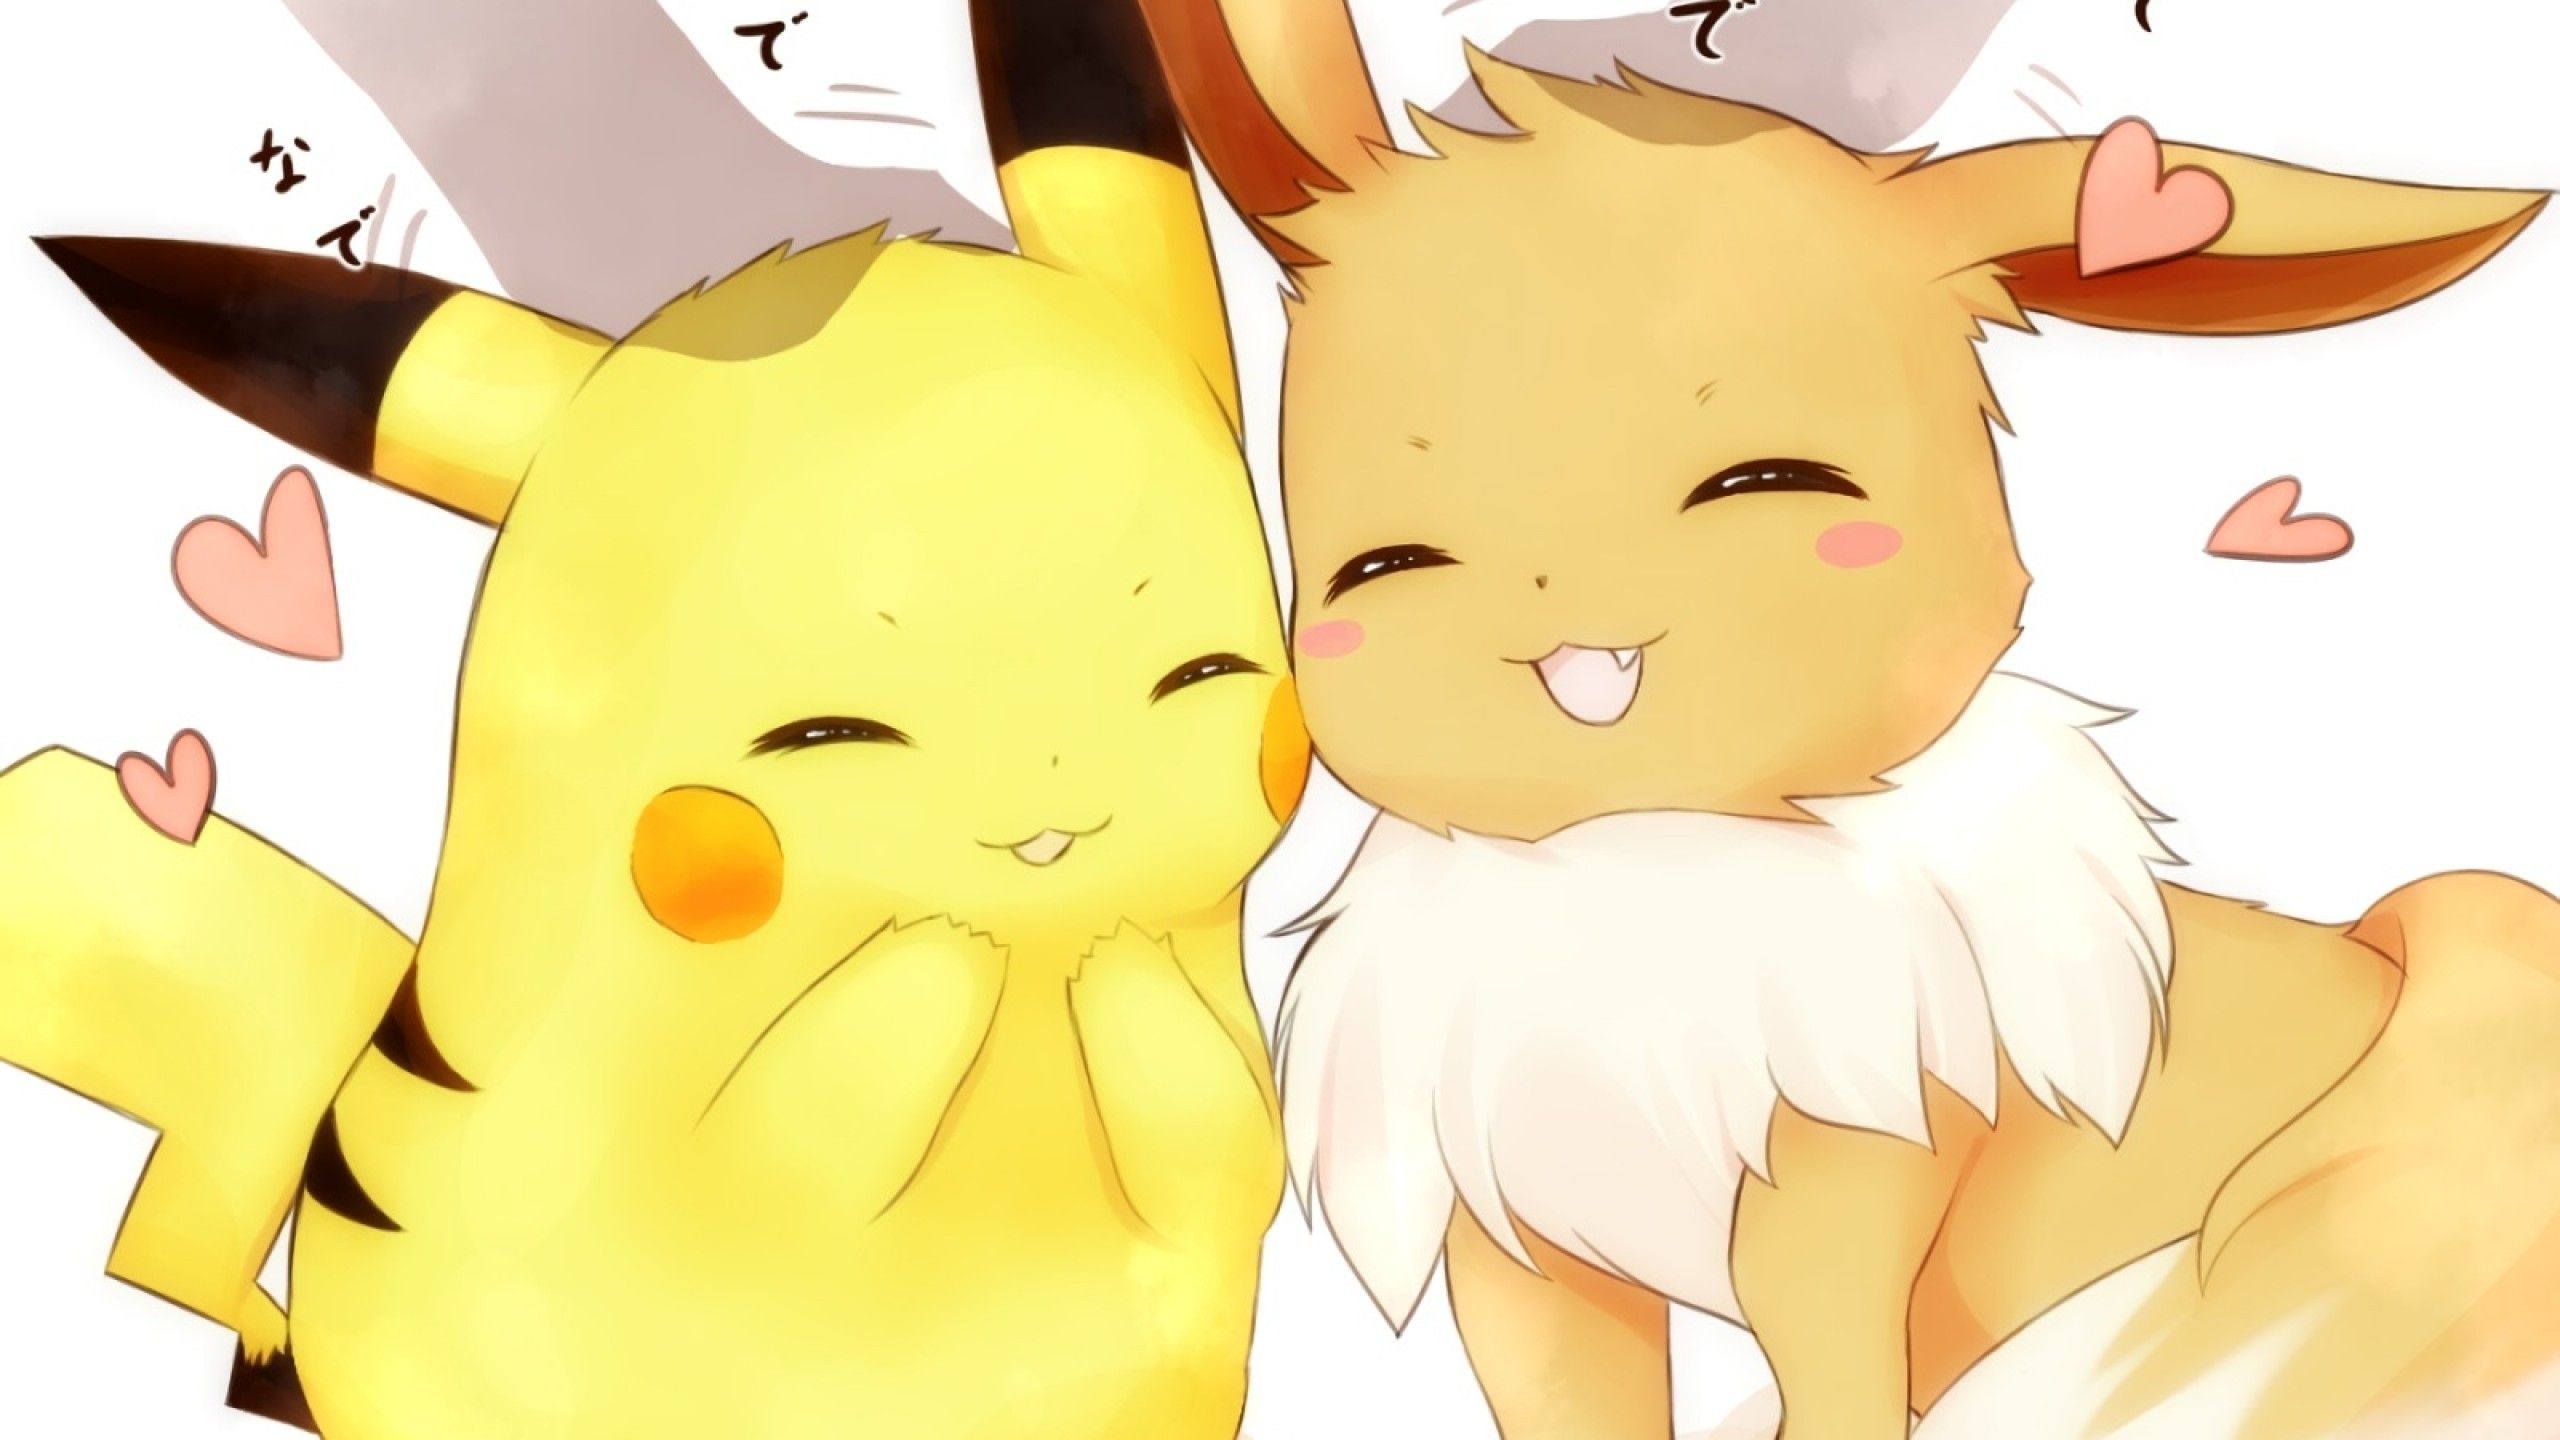 Cute Pikachu Wallpapers - Top 25 Best Cute Pikachu Wallpapers Download